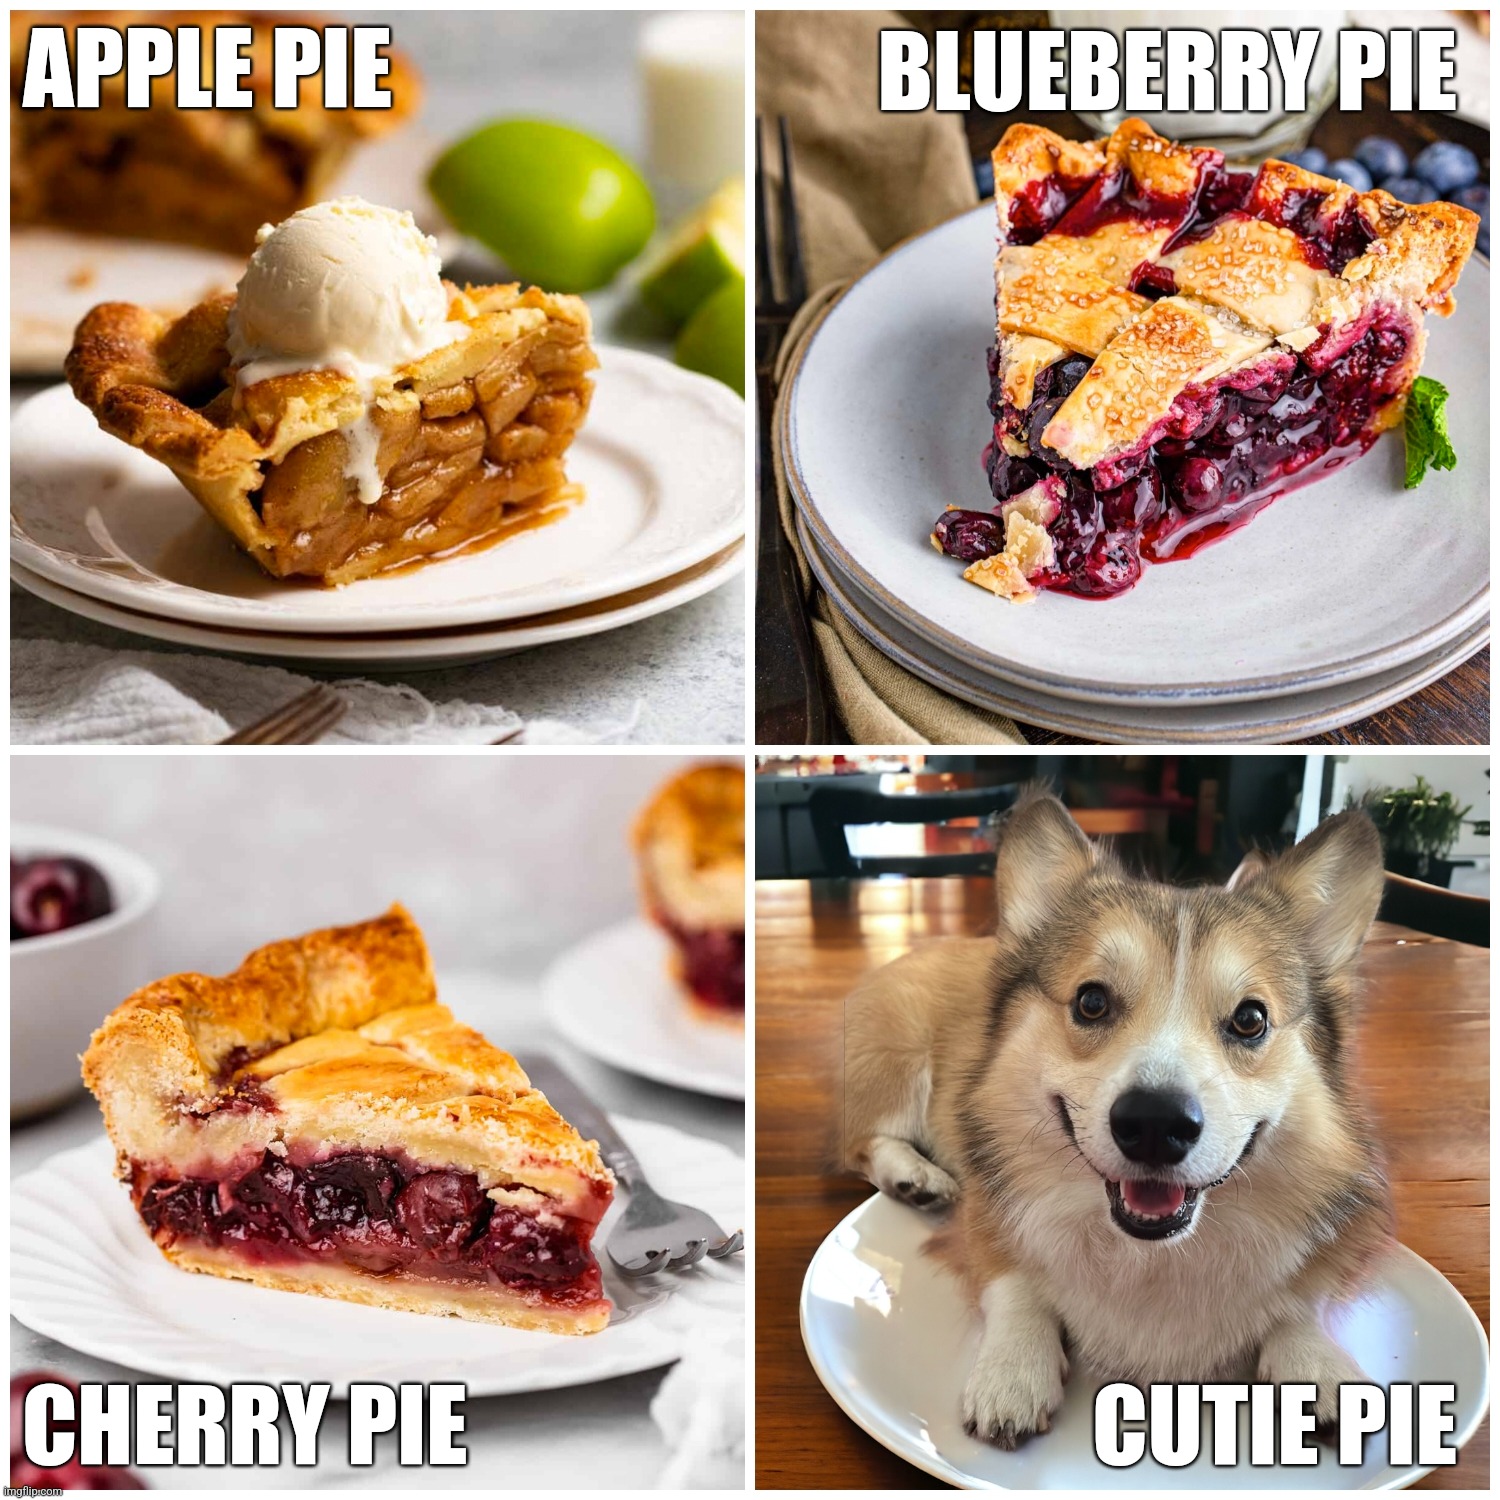 Cutie pie | APPLE PIE; BLUEBERRY PIE; CUTIE PIE; CHERRY PIE | image tagged in corgi,cute,cute dog,cute puppies,funny,funny animals | made w/ Imgflip meme maker